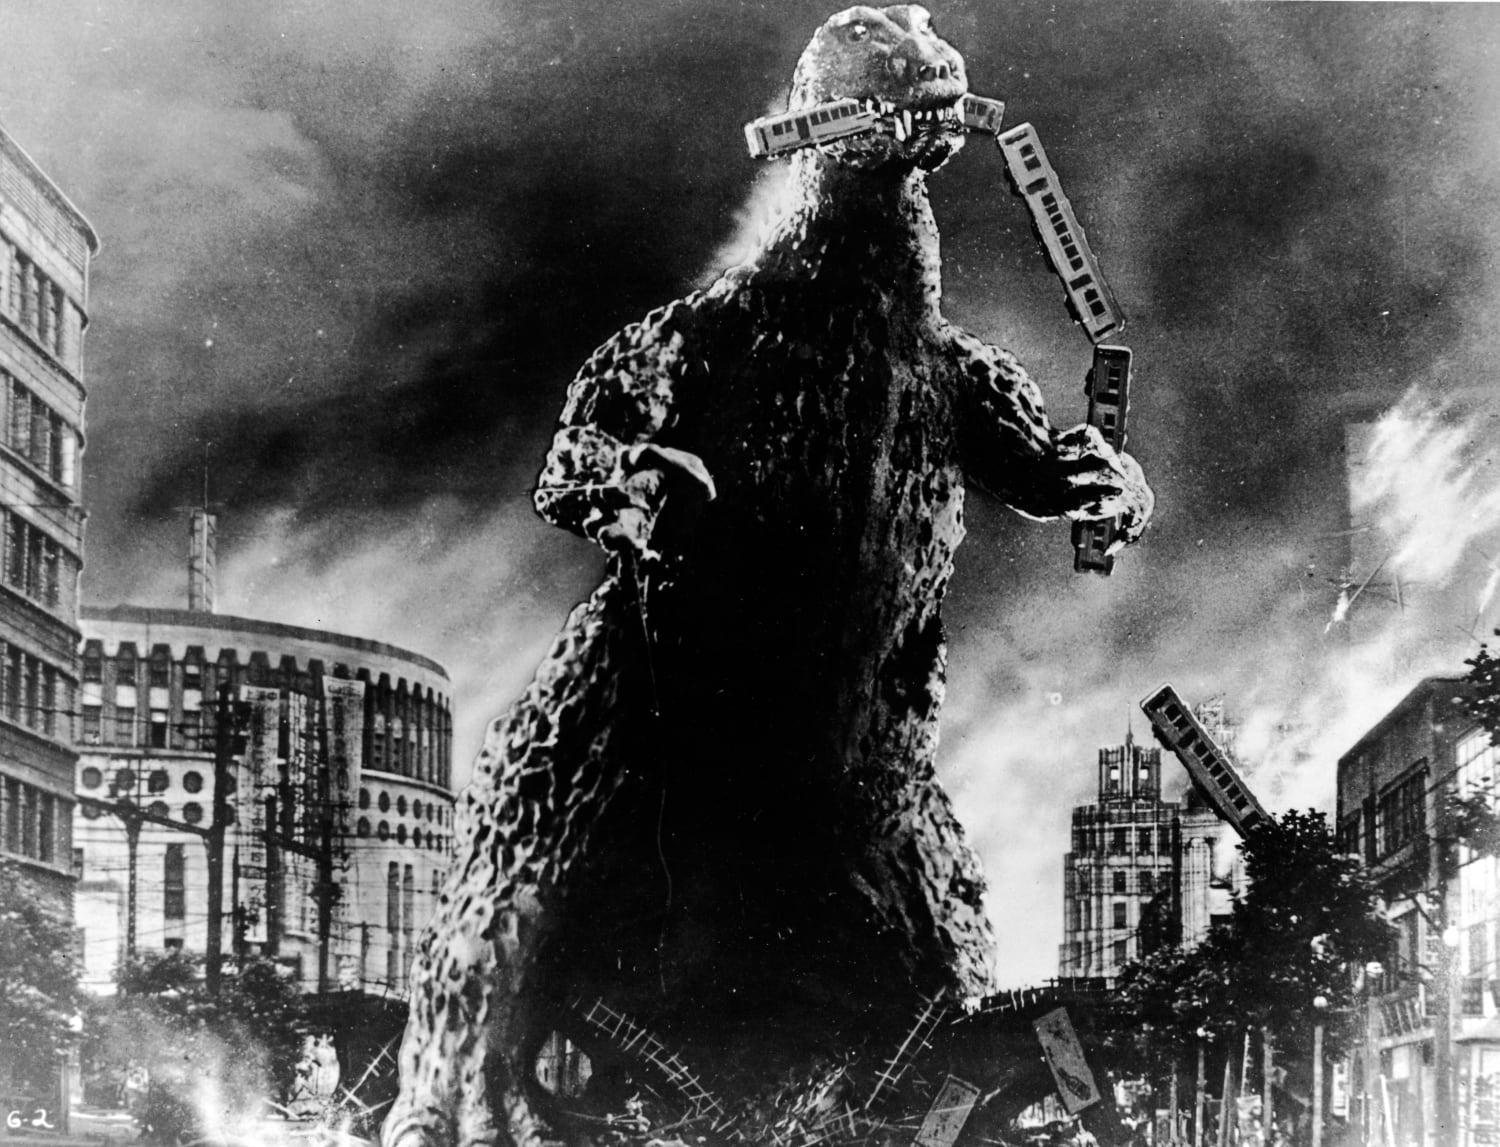 Godzilla' was a metaphor for Hiroshima, and Hollywood whitewashed it